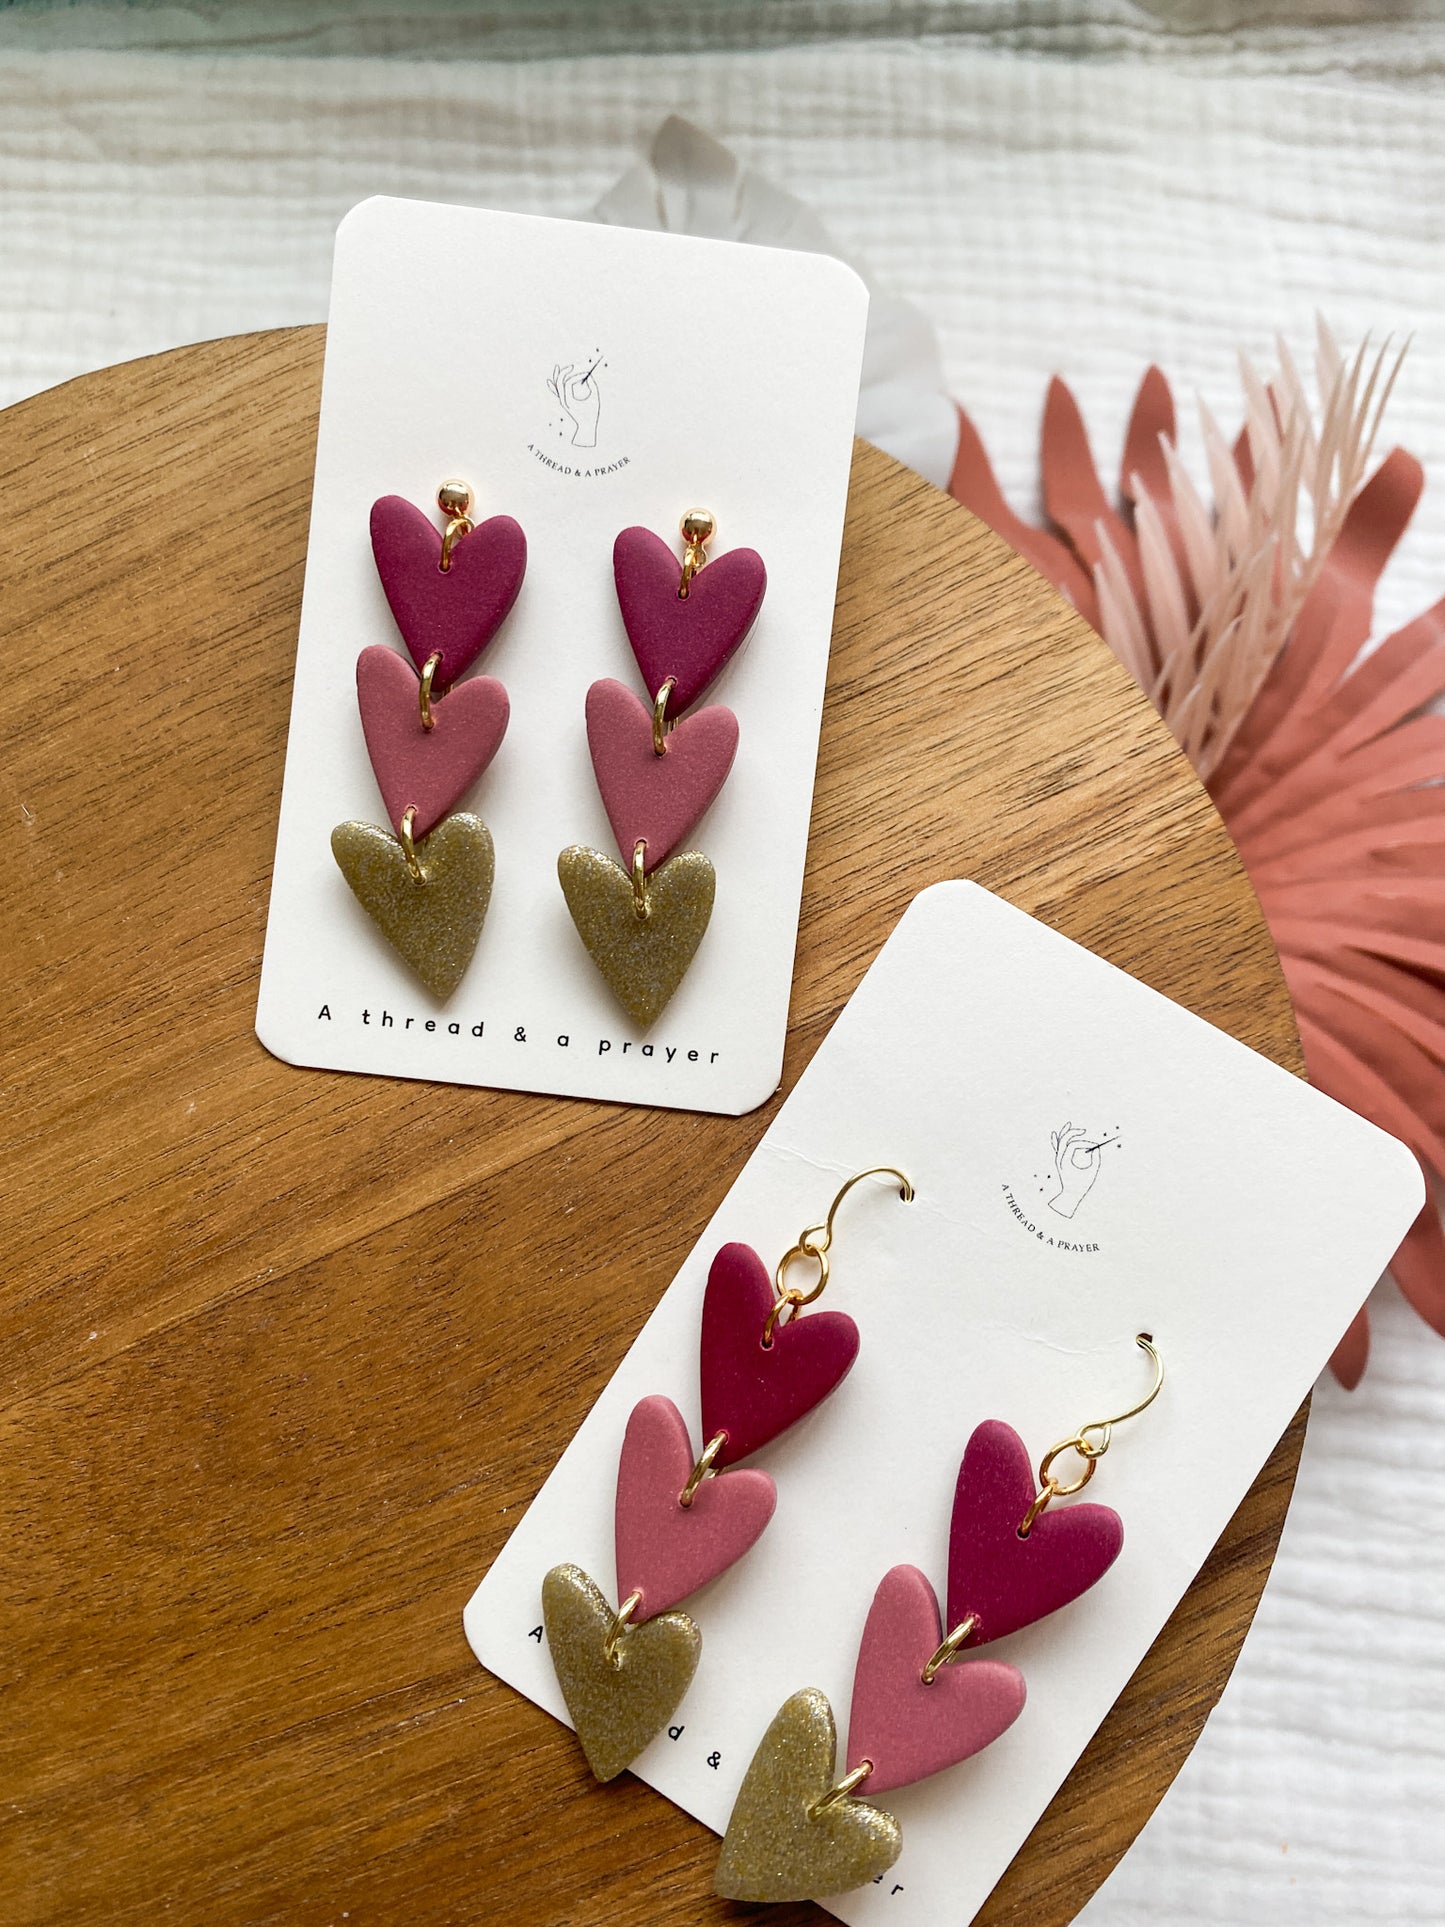 Style 2: Cute Valentine's Day Heart Dangles | Galentine's Day Earrings | Pink Earrings | Lightweight